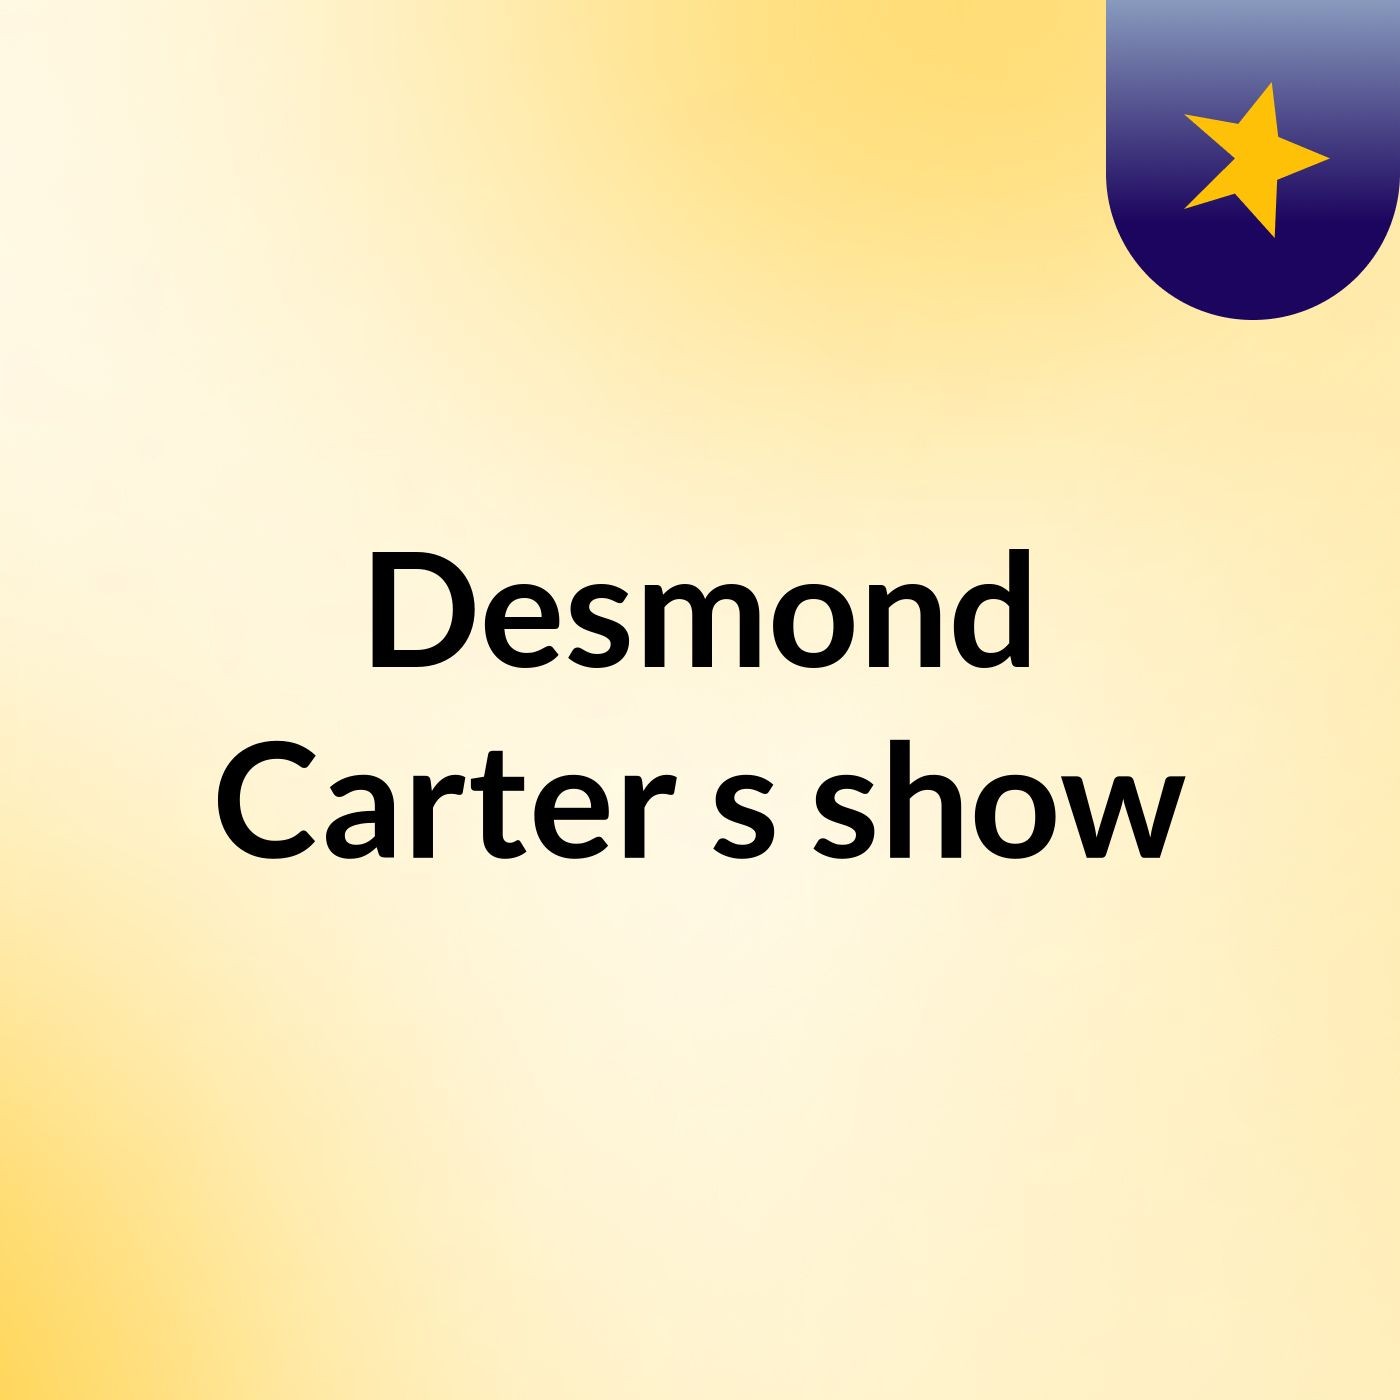 Desmond Carter's show